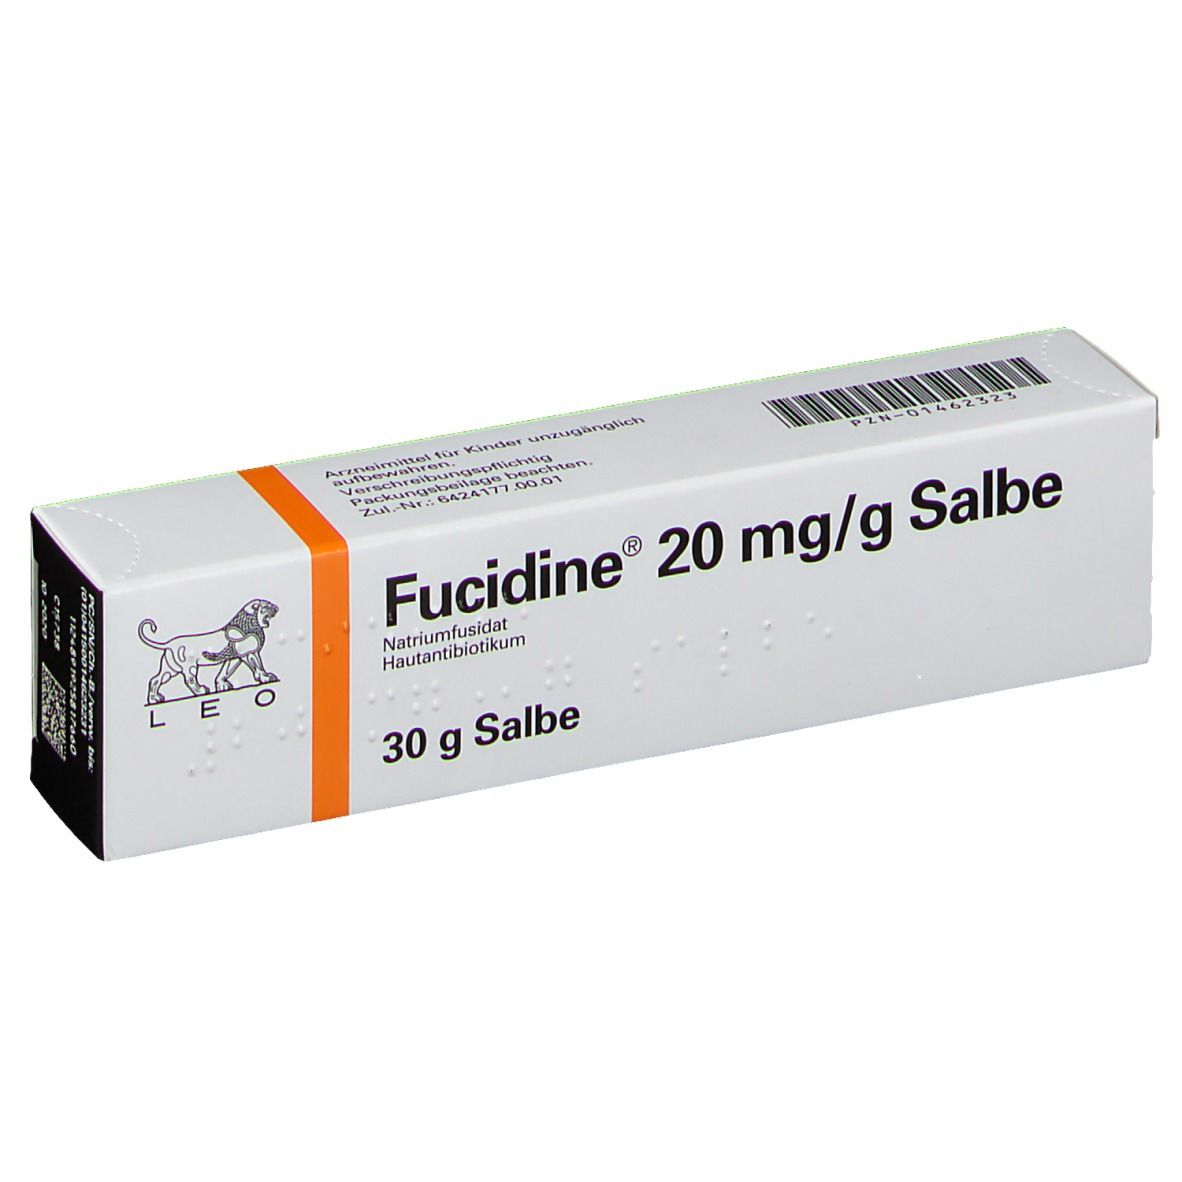 Fucidine® Salbe